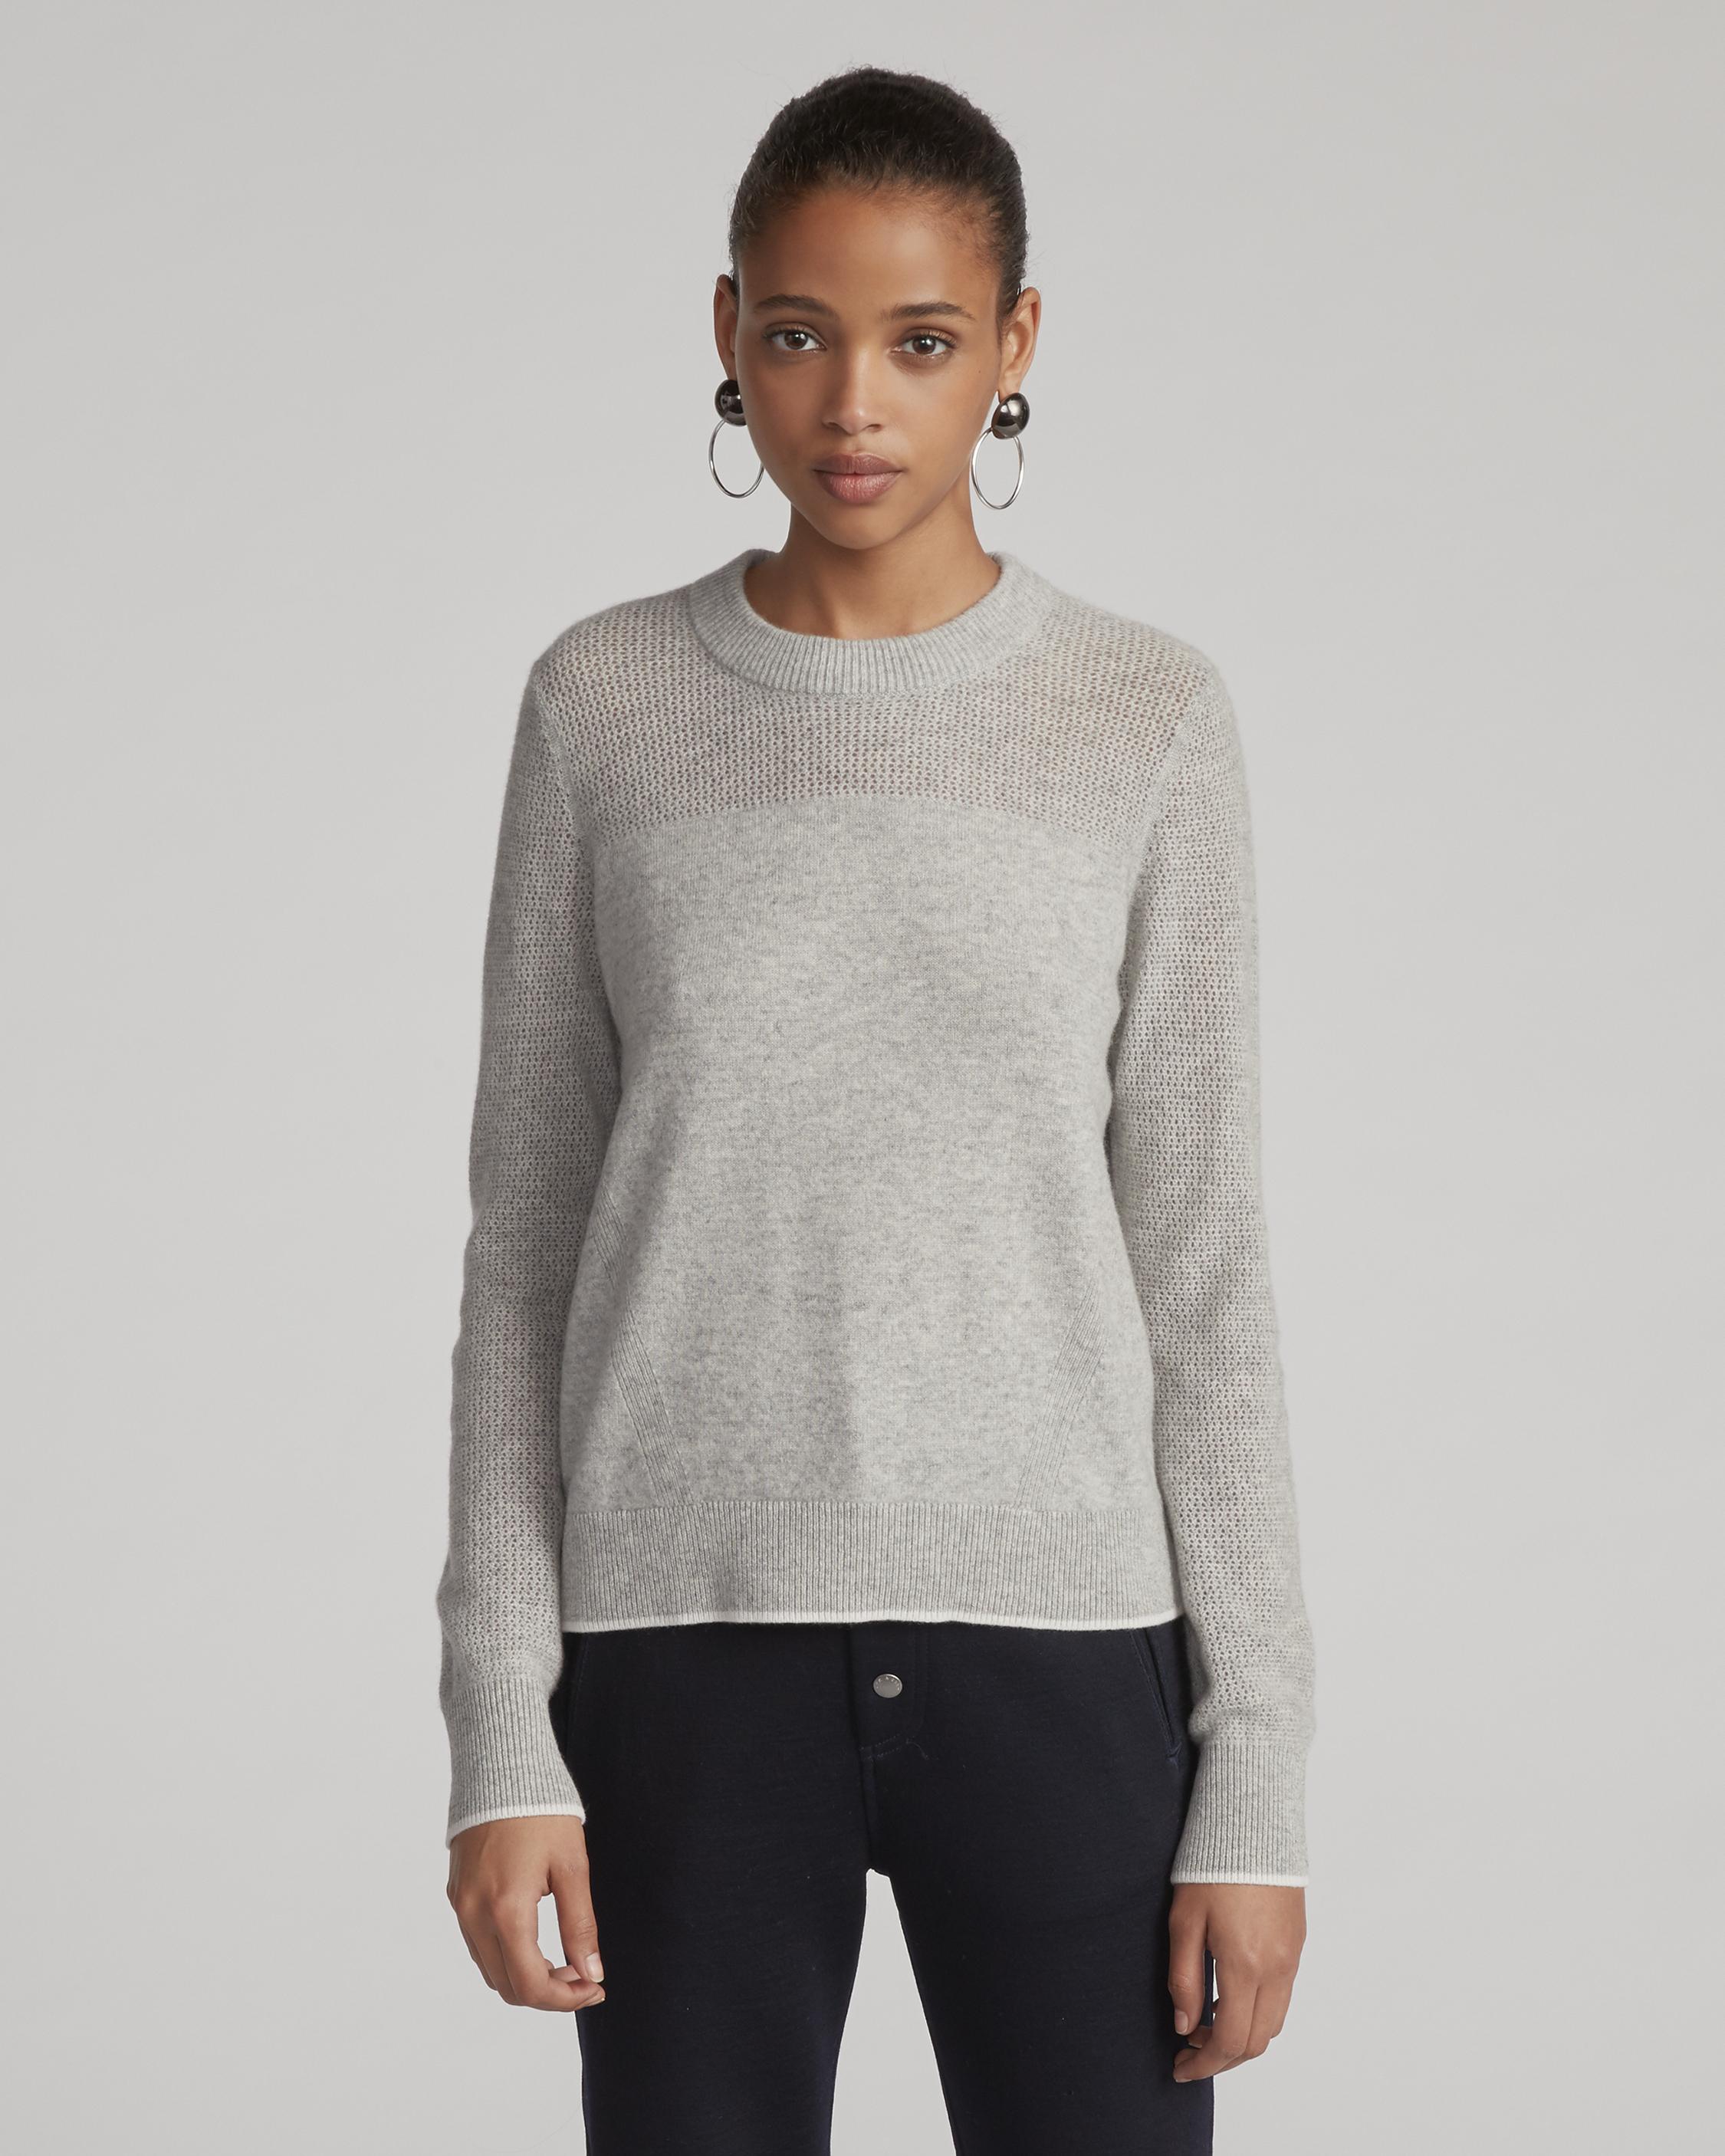 Sweaters, Sweatshirts & Cardigans in Cashmere, Wool & Knit| rag & bone